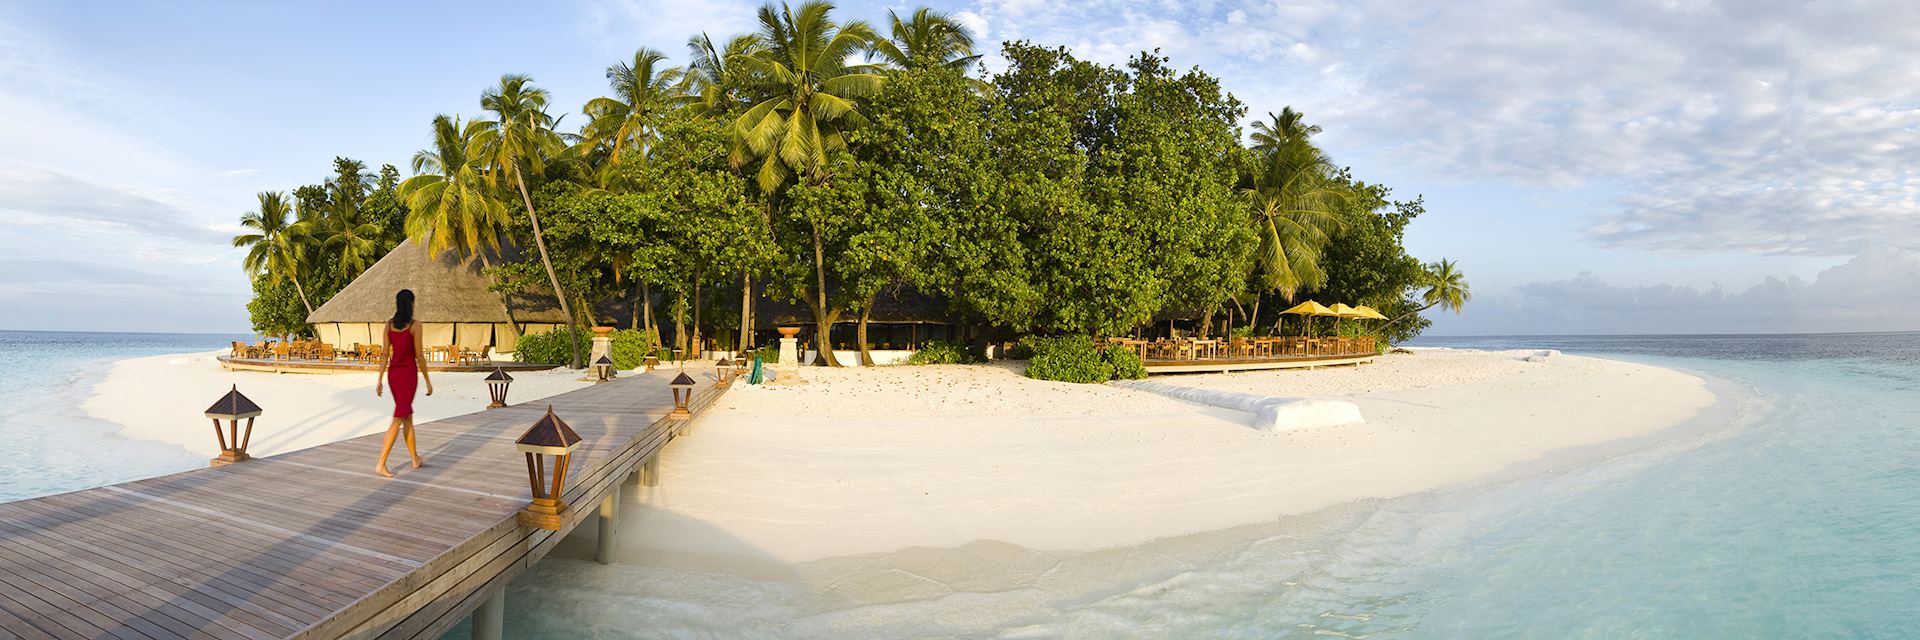 Jetty, Ihuru Island on the Maldives